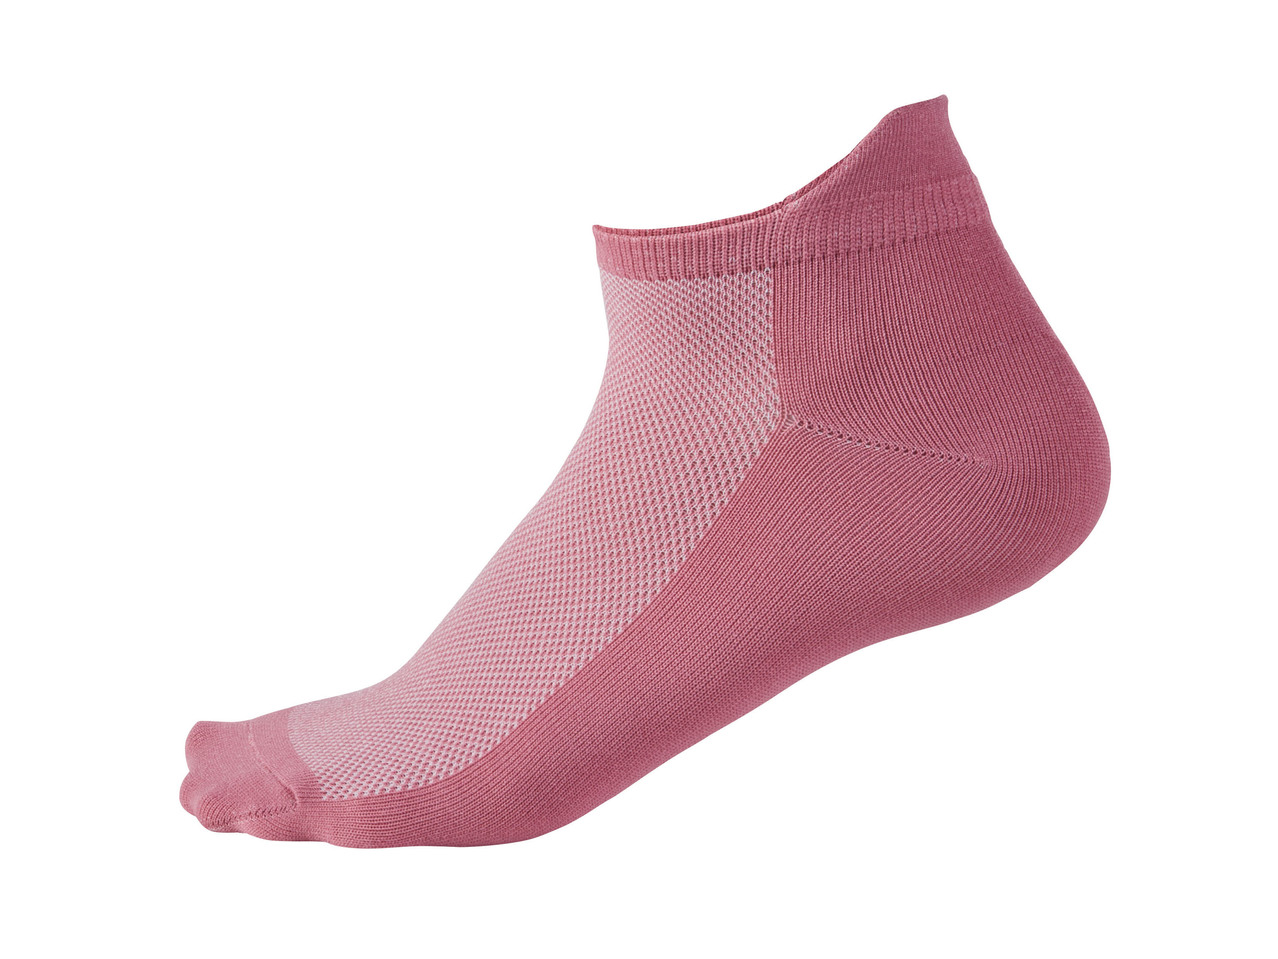 Ladies' Trainer Socks, 3 pairs